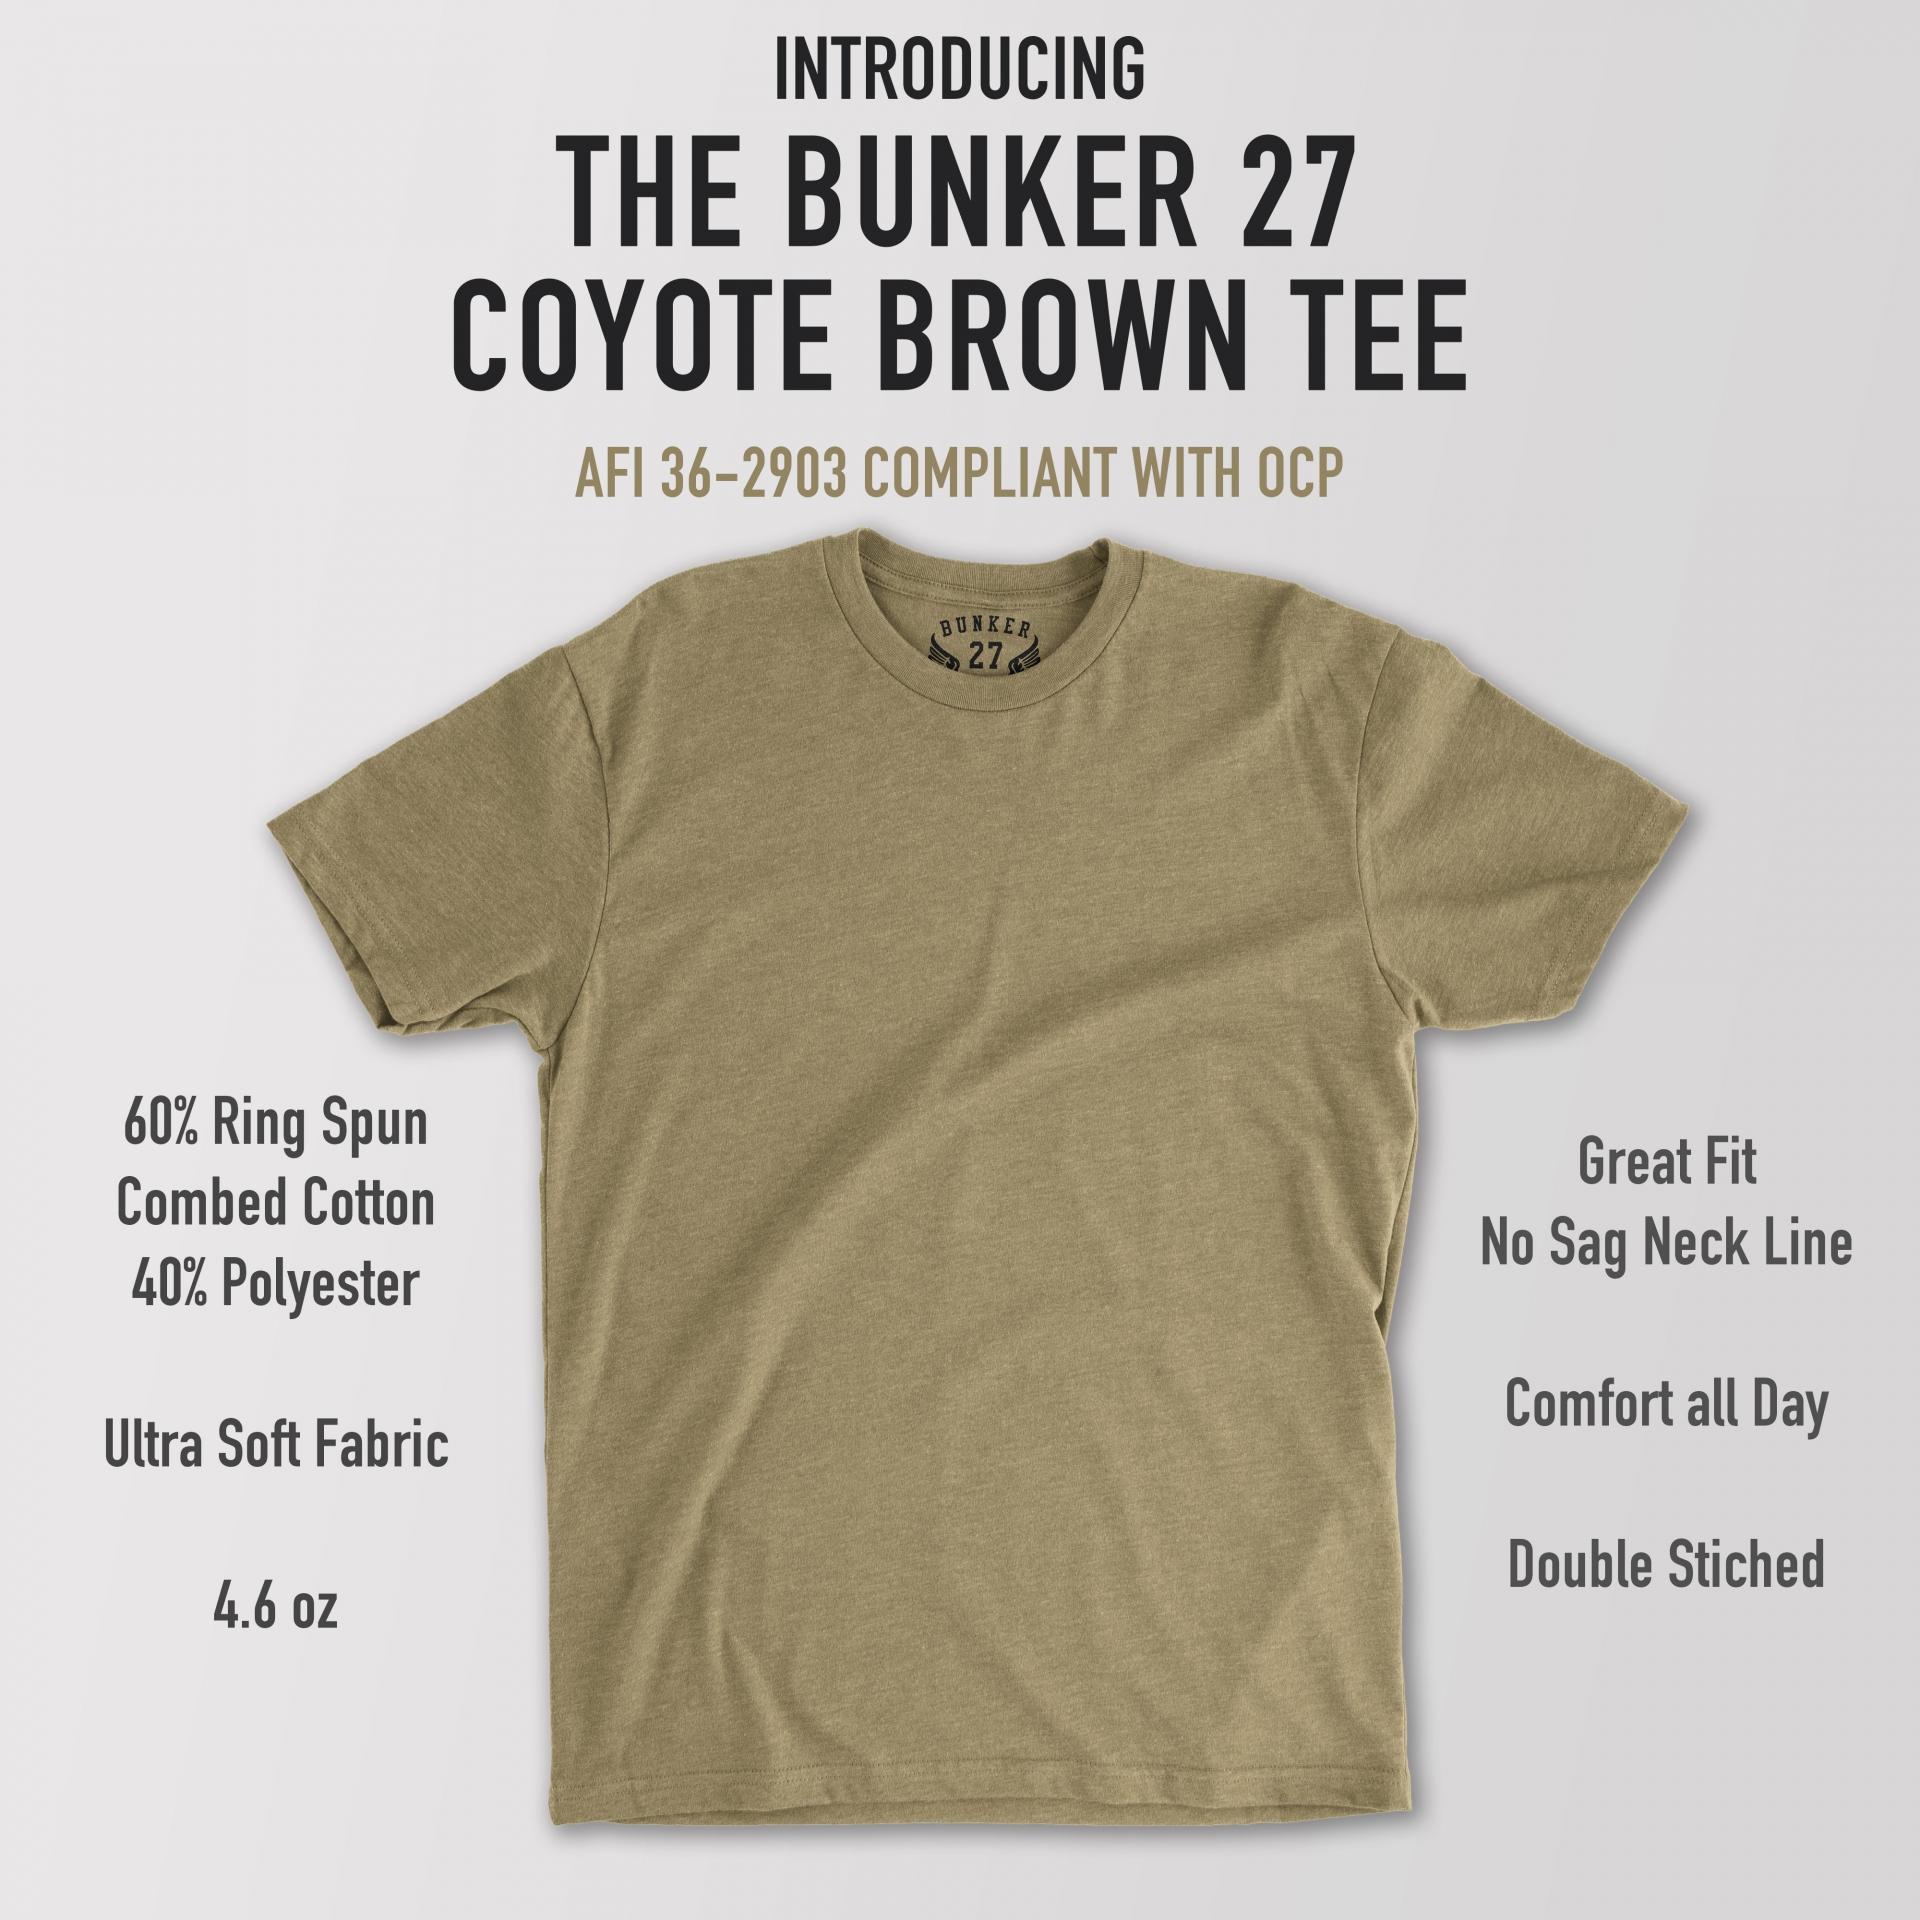 Bunker 27 COYOTE BROWN T-SHIRT AFI 36-2903